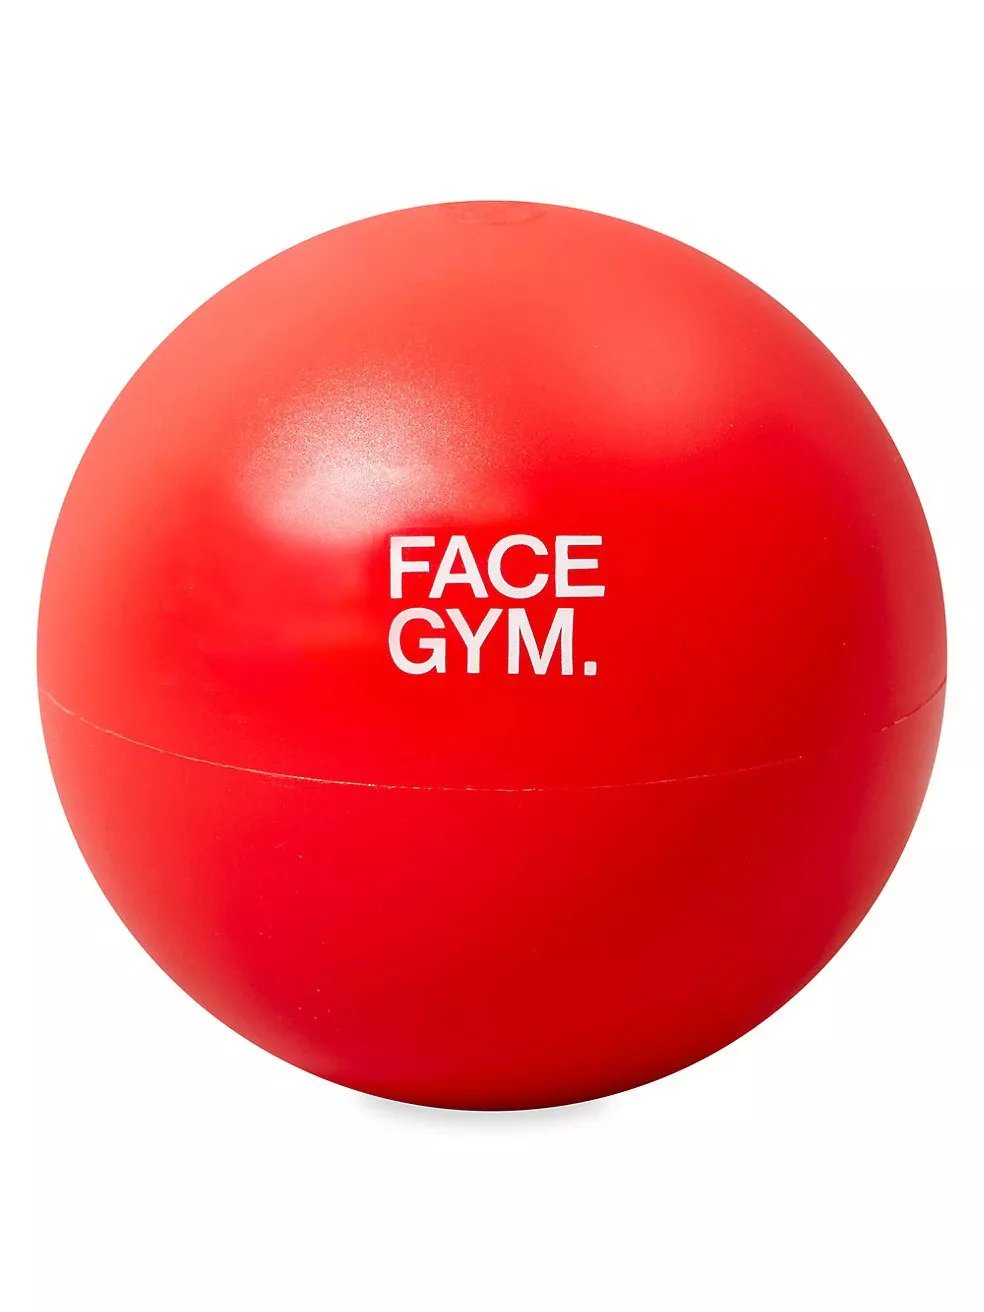 Facegym Face Ball in red